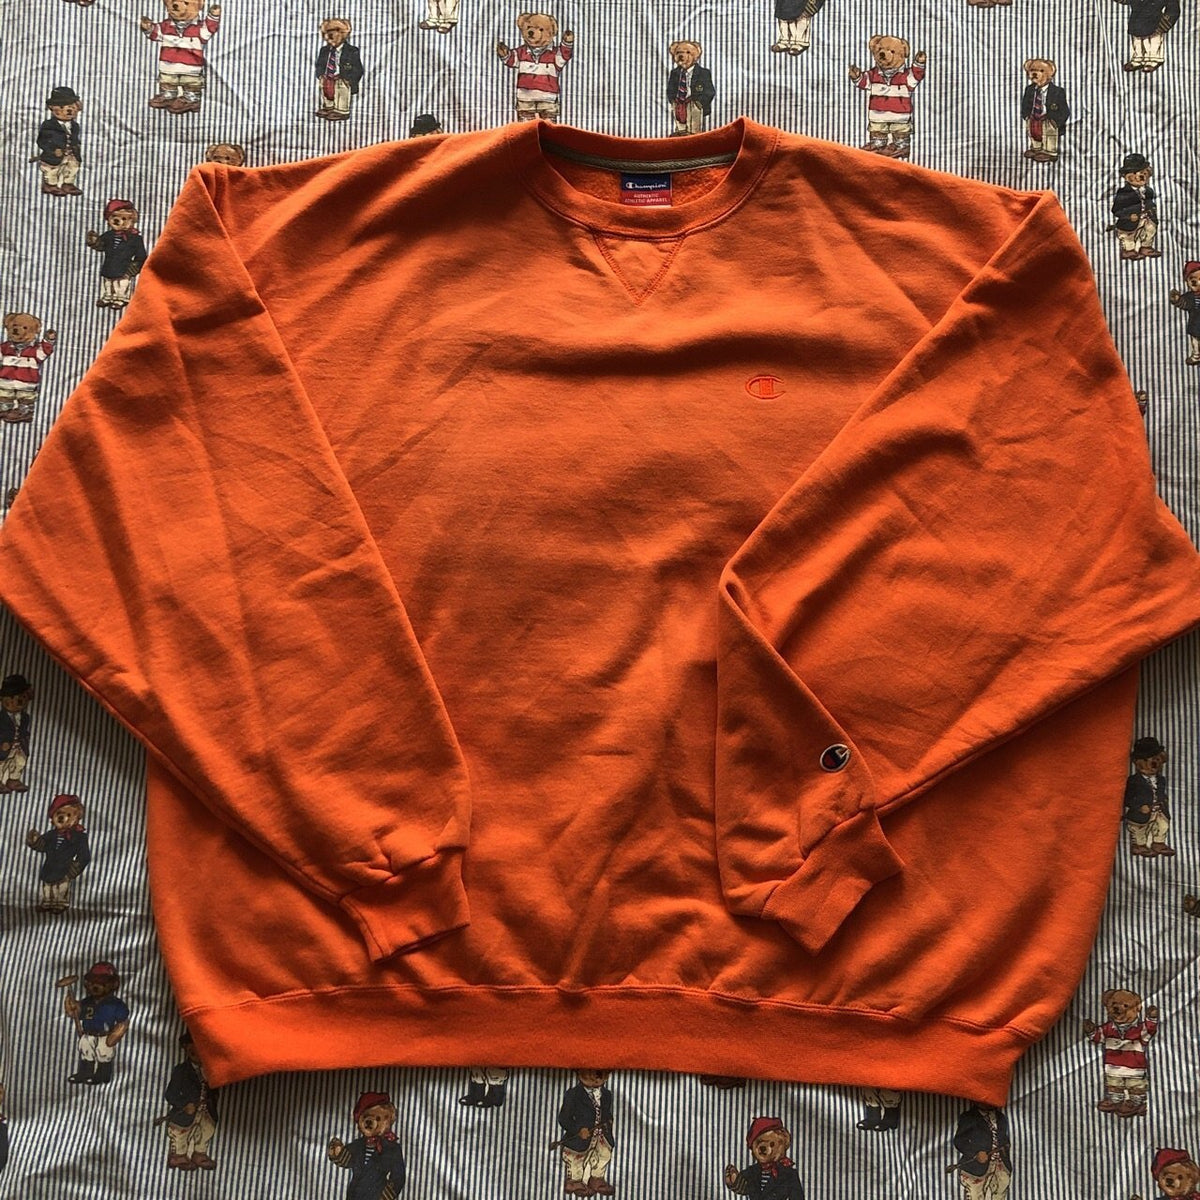 vintage orange champion sweatshirt